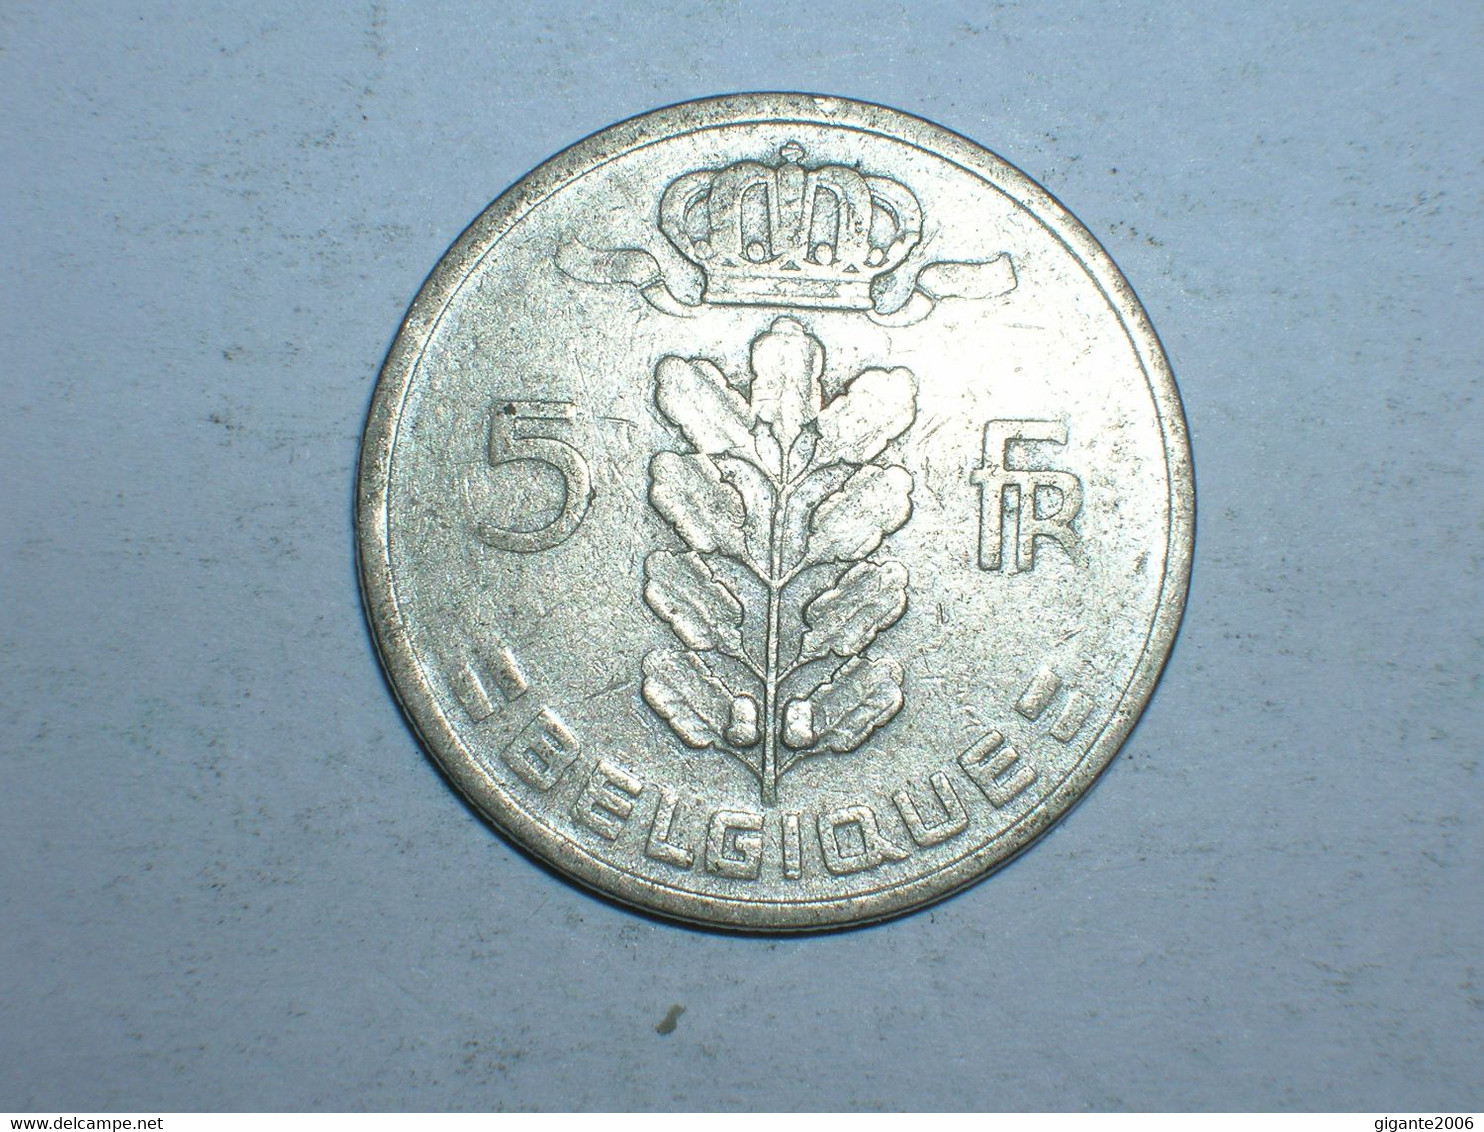 BELGICA 5 FRANCOS 1948 FR (9702) - Unclassified